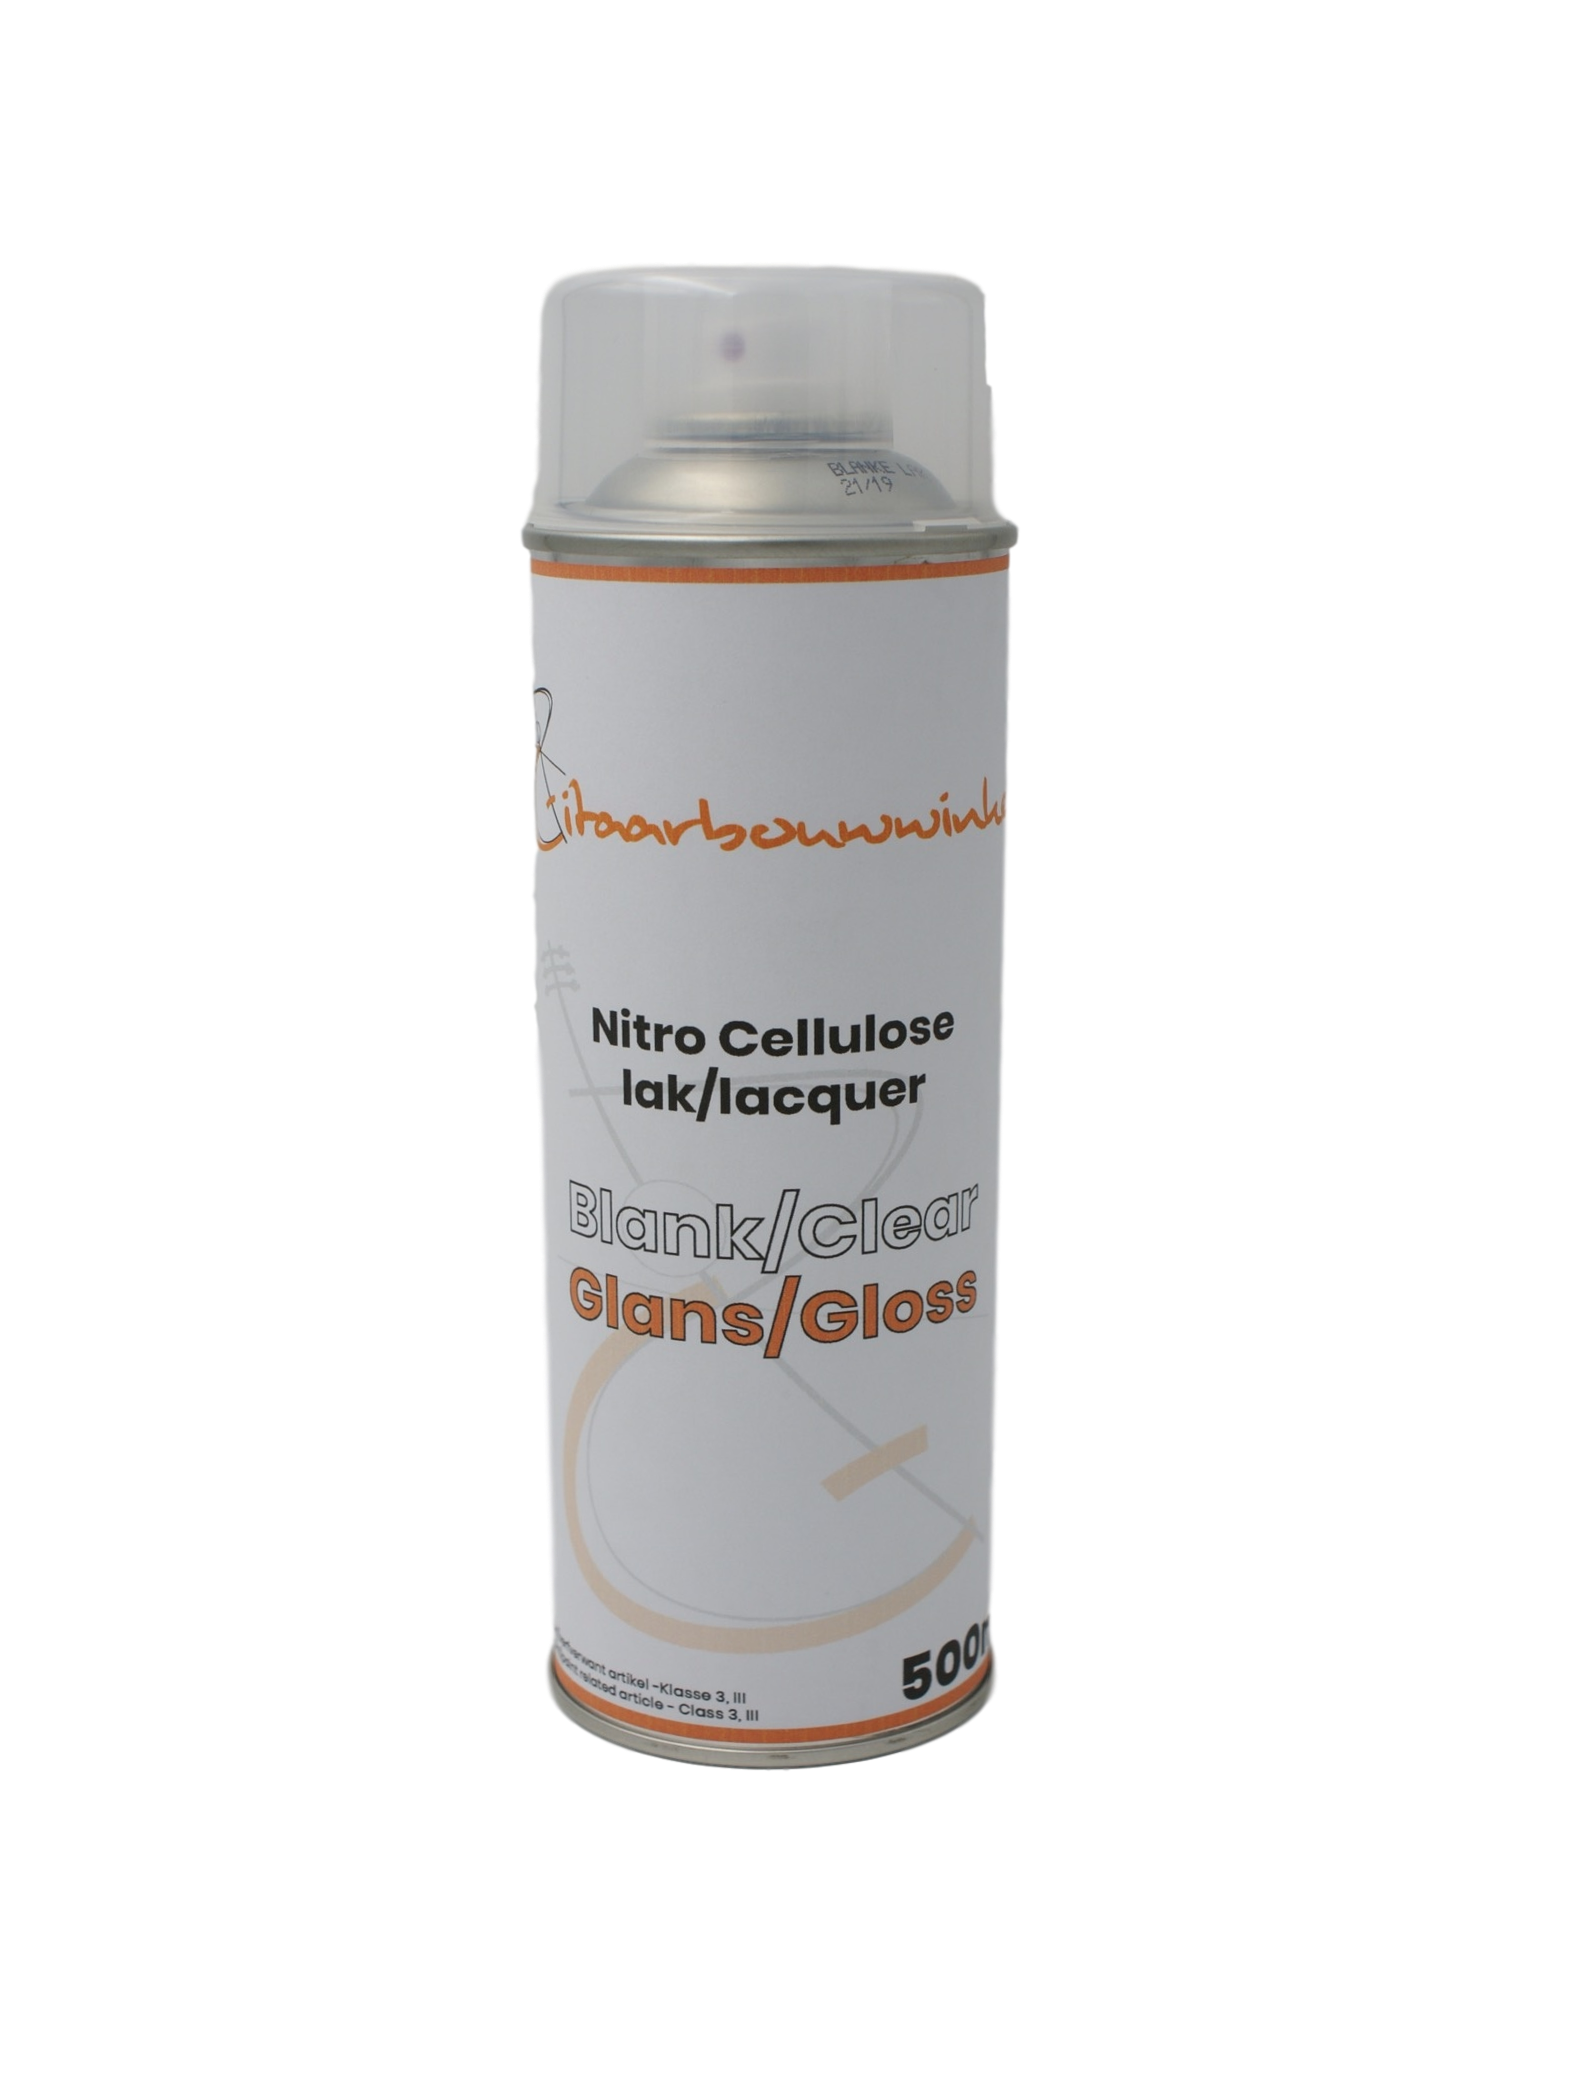 LT-9664-000 - Nitorlack Pearly Finish Nitrocellulose Spray